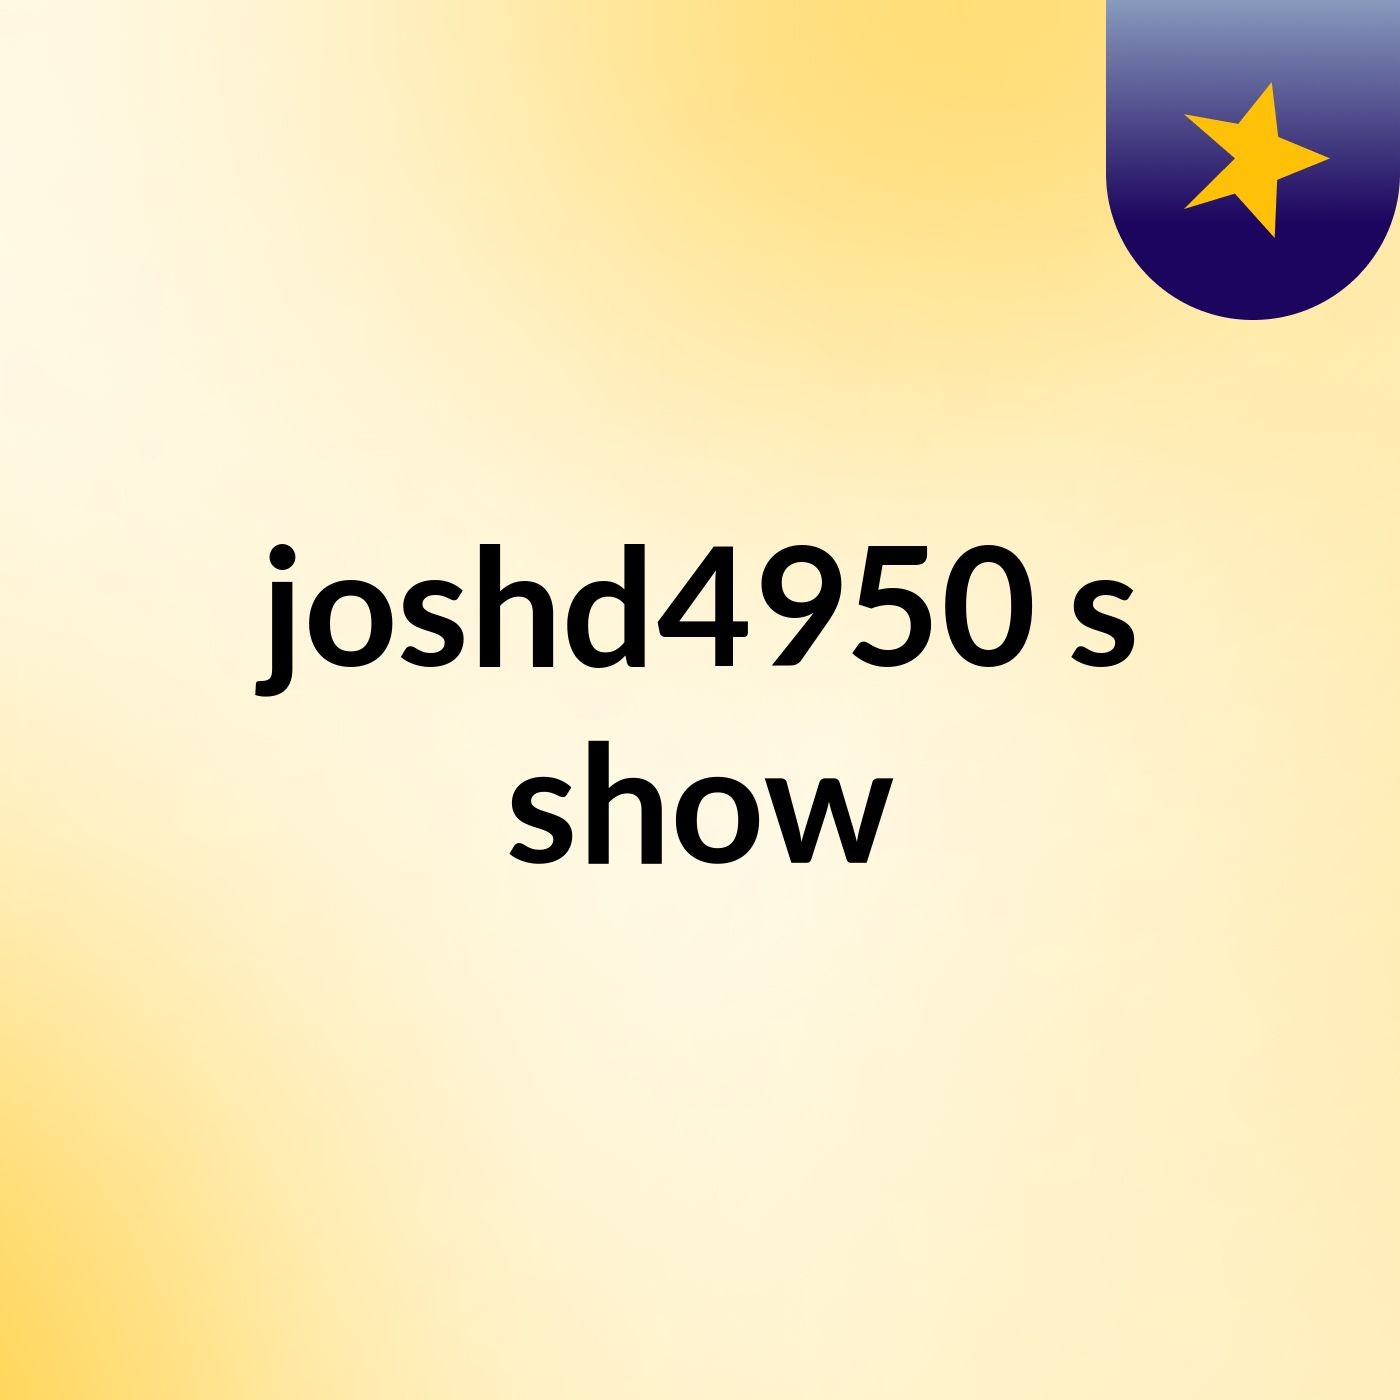 joshd4950's show